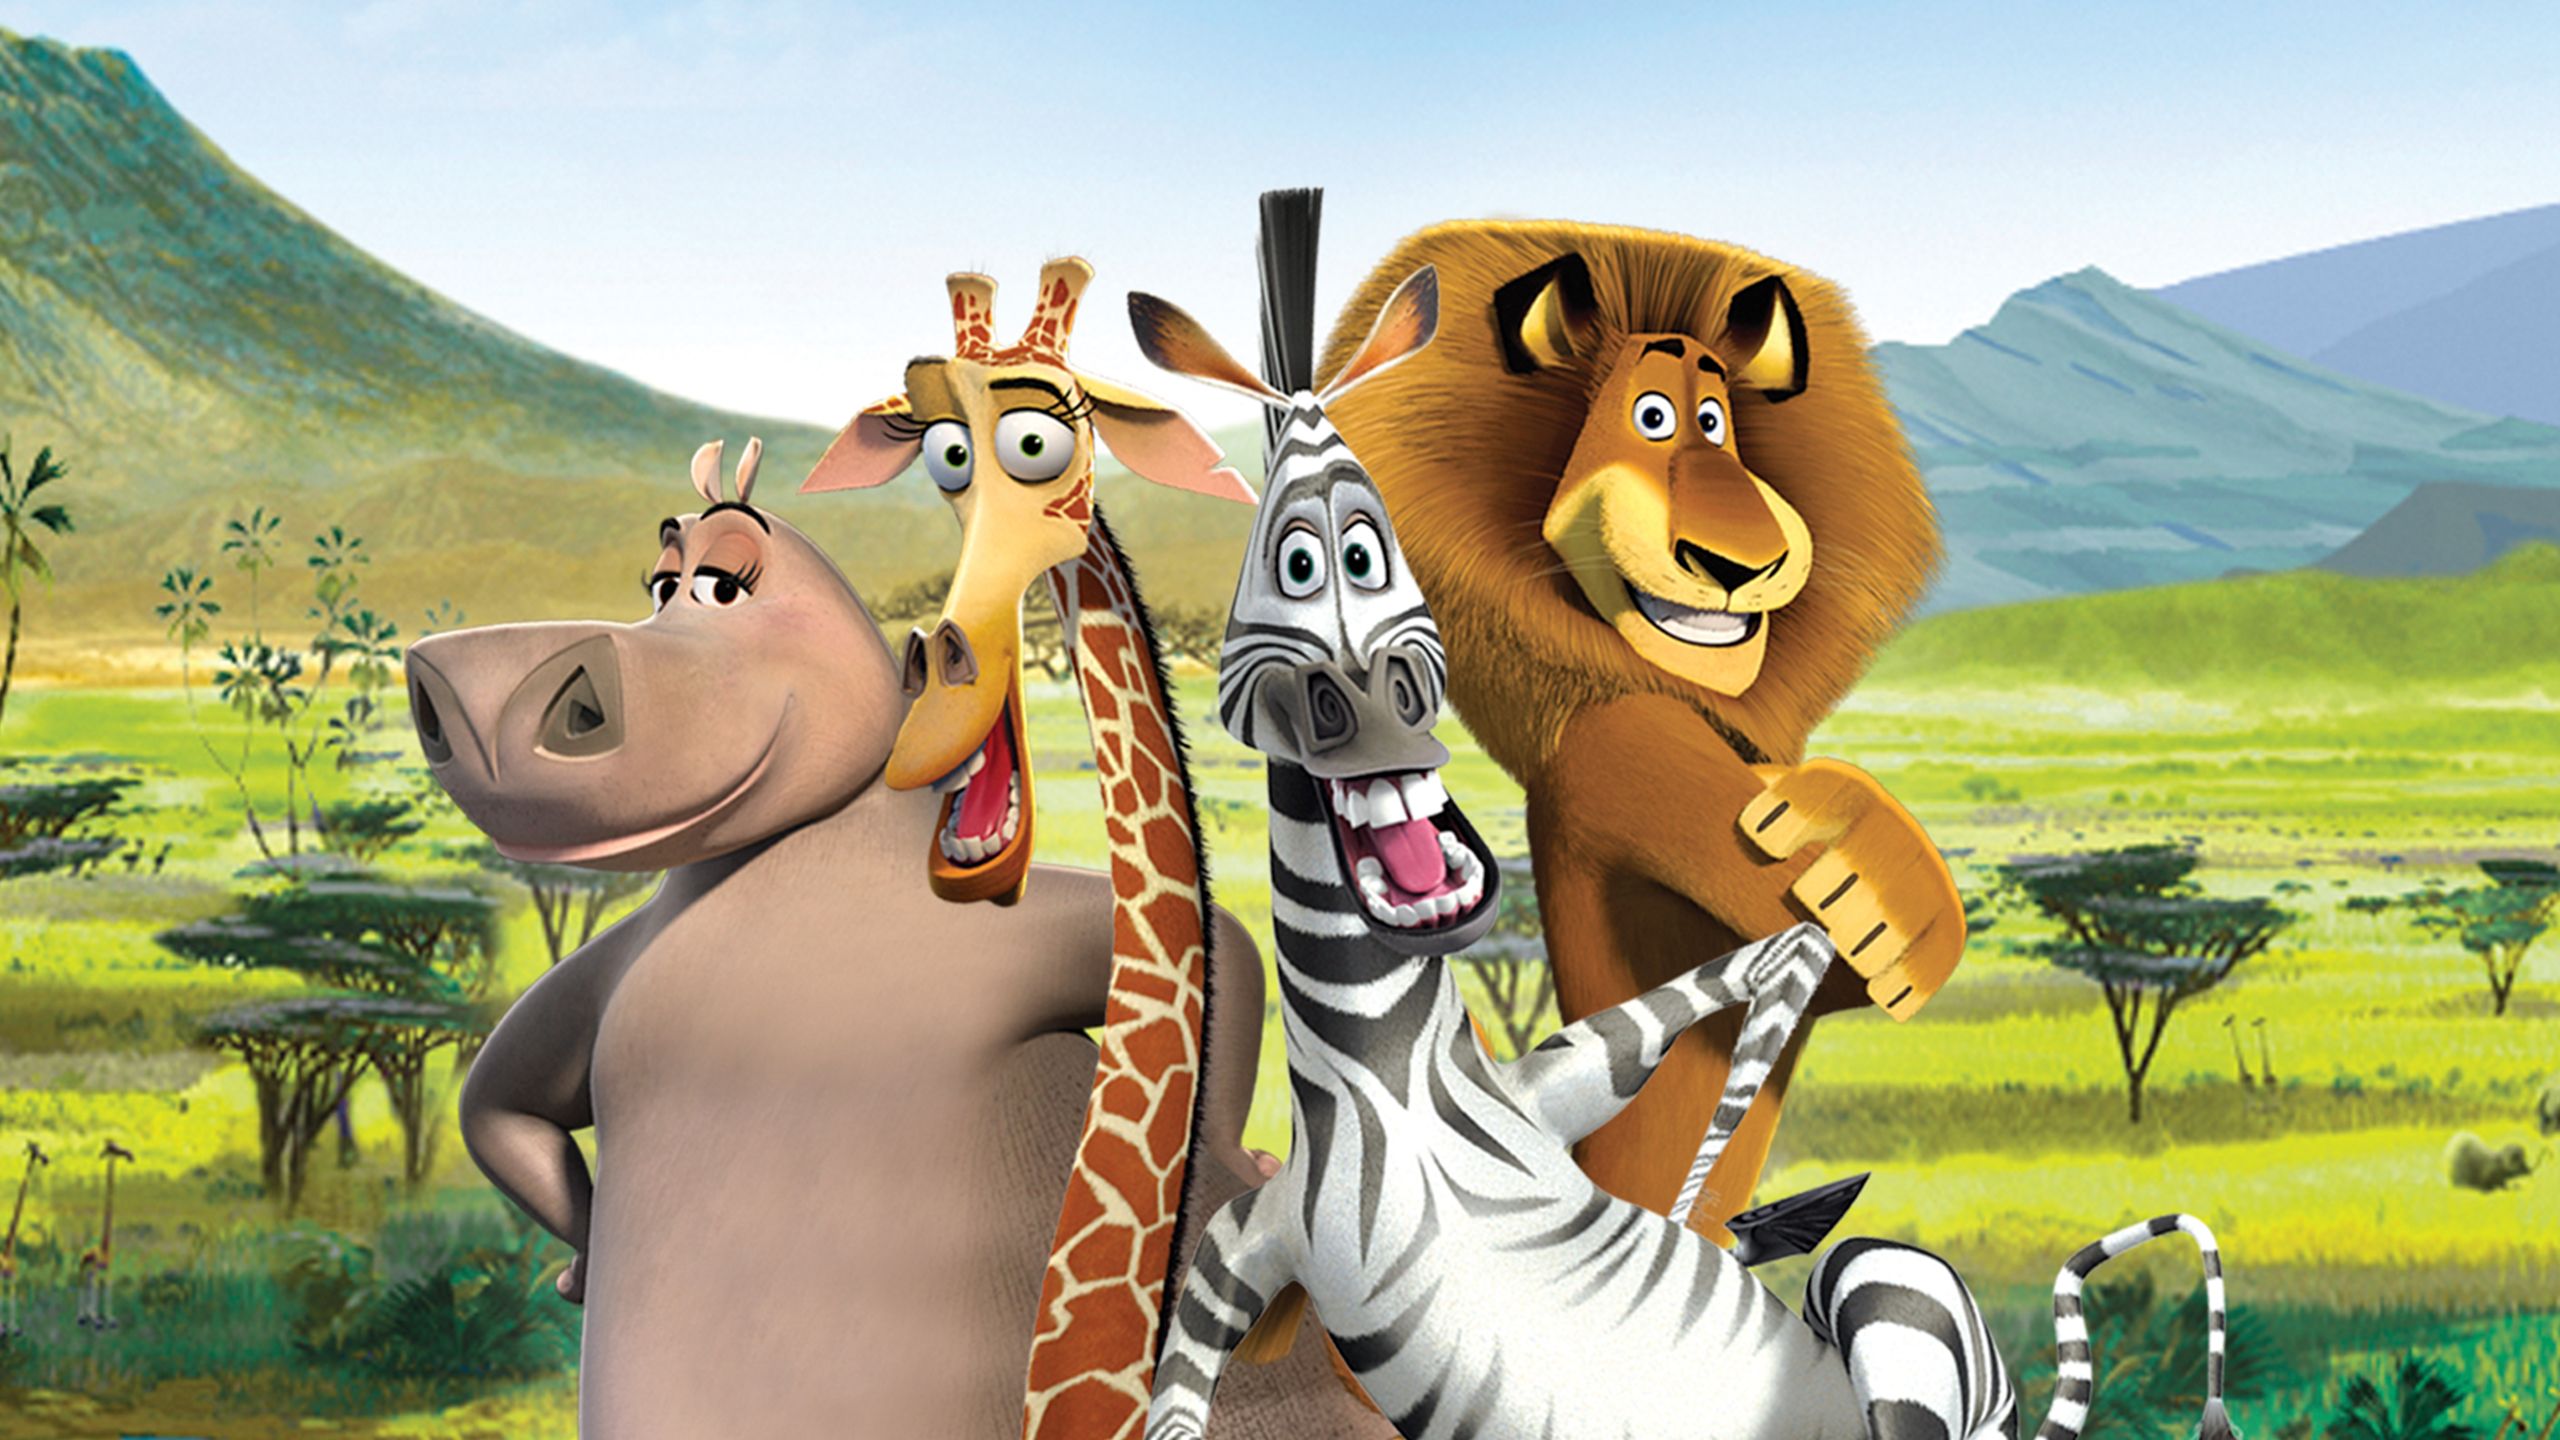 Madagascar movie